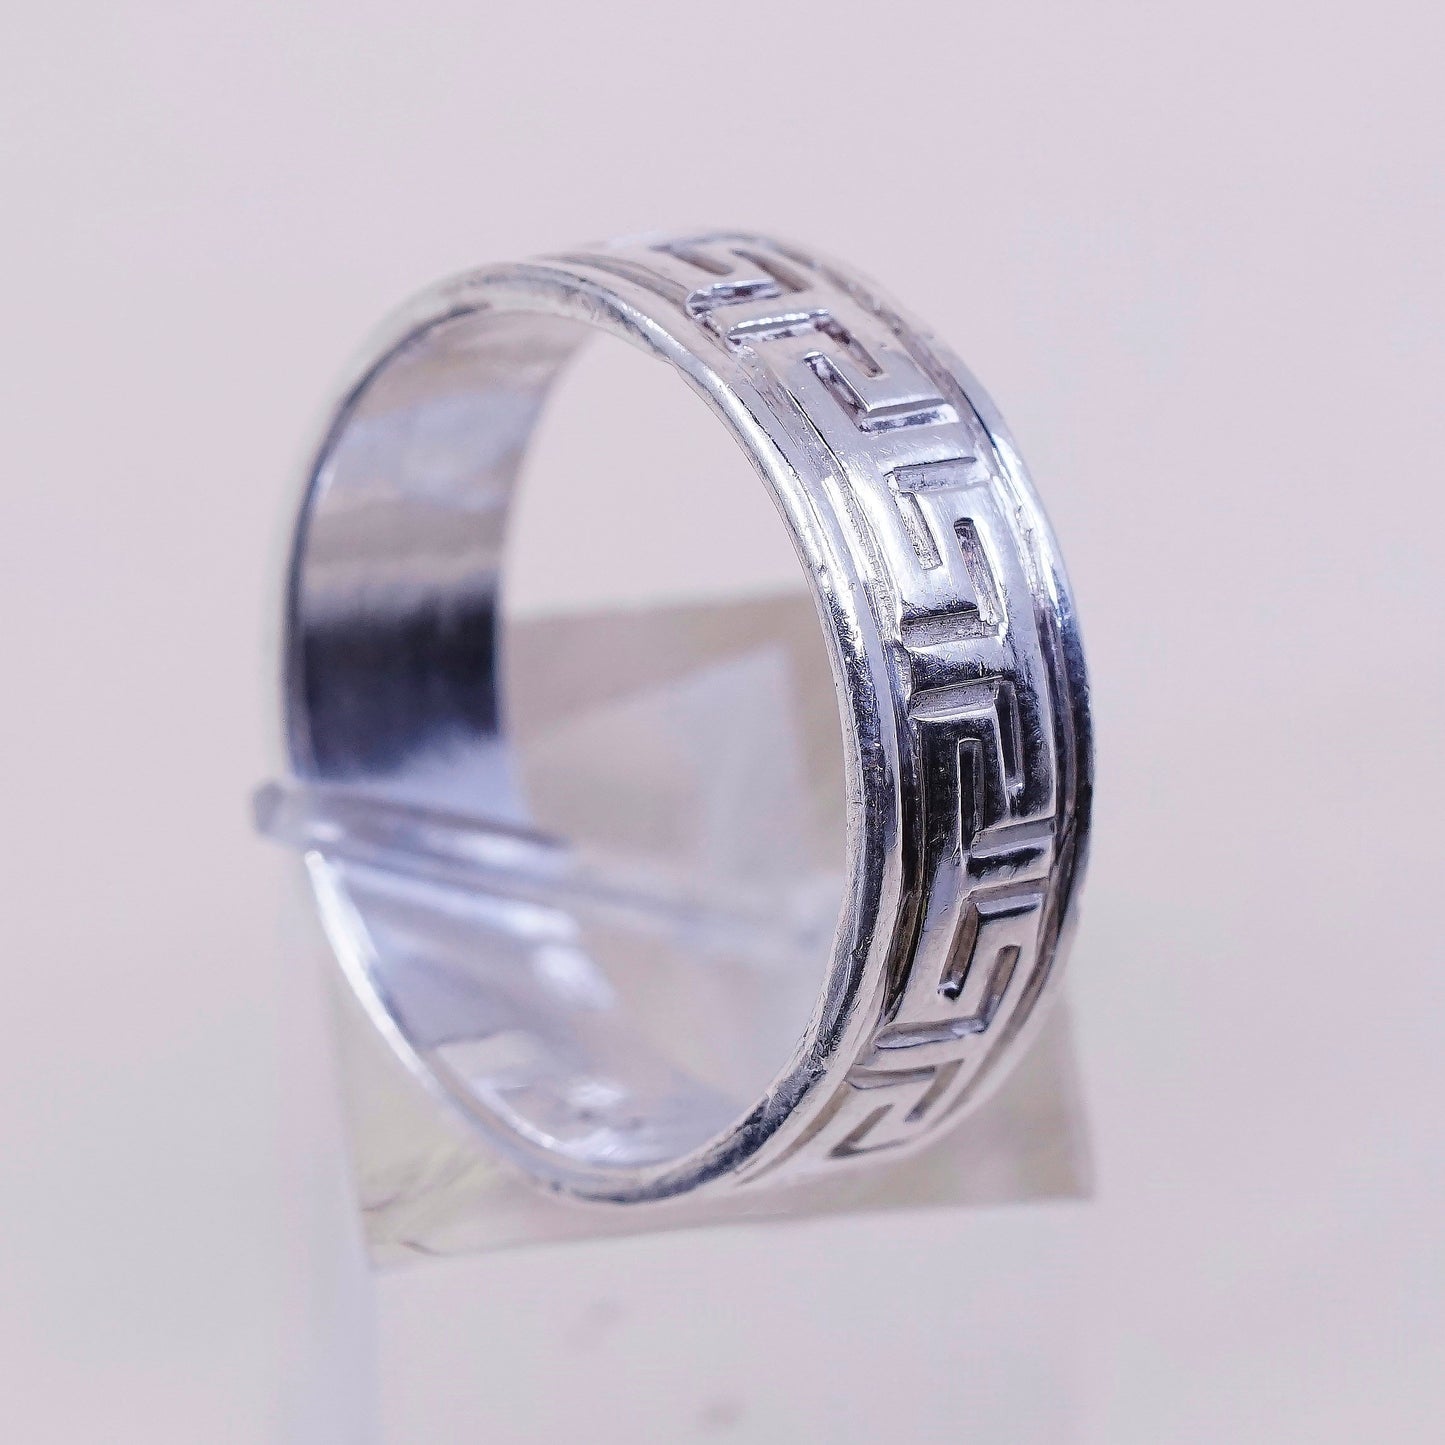 sz 10.25, vtg sterling silver handmade ring, Greek key 925 statement band